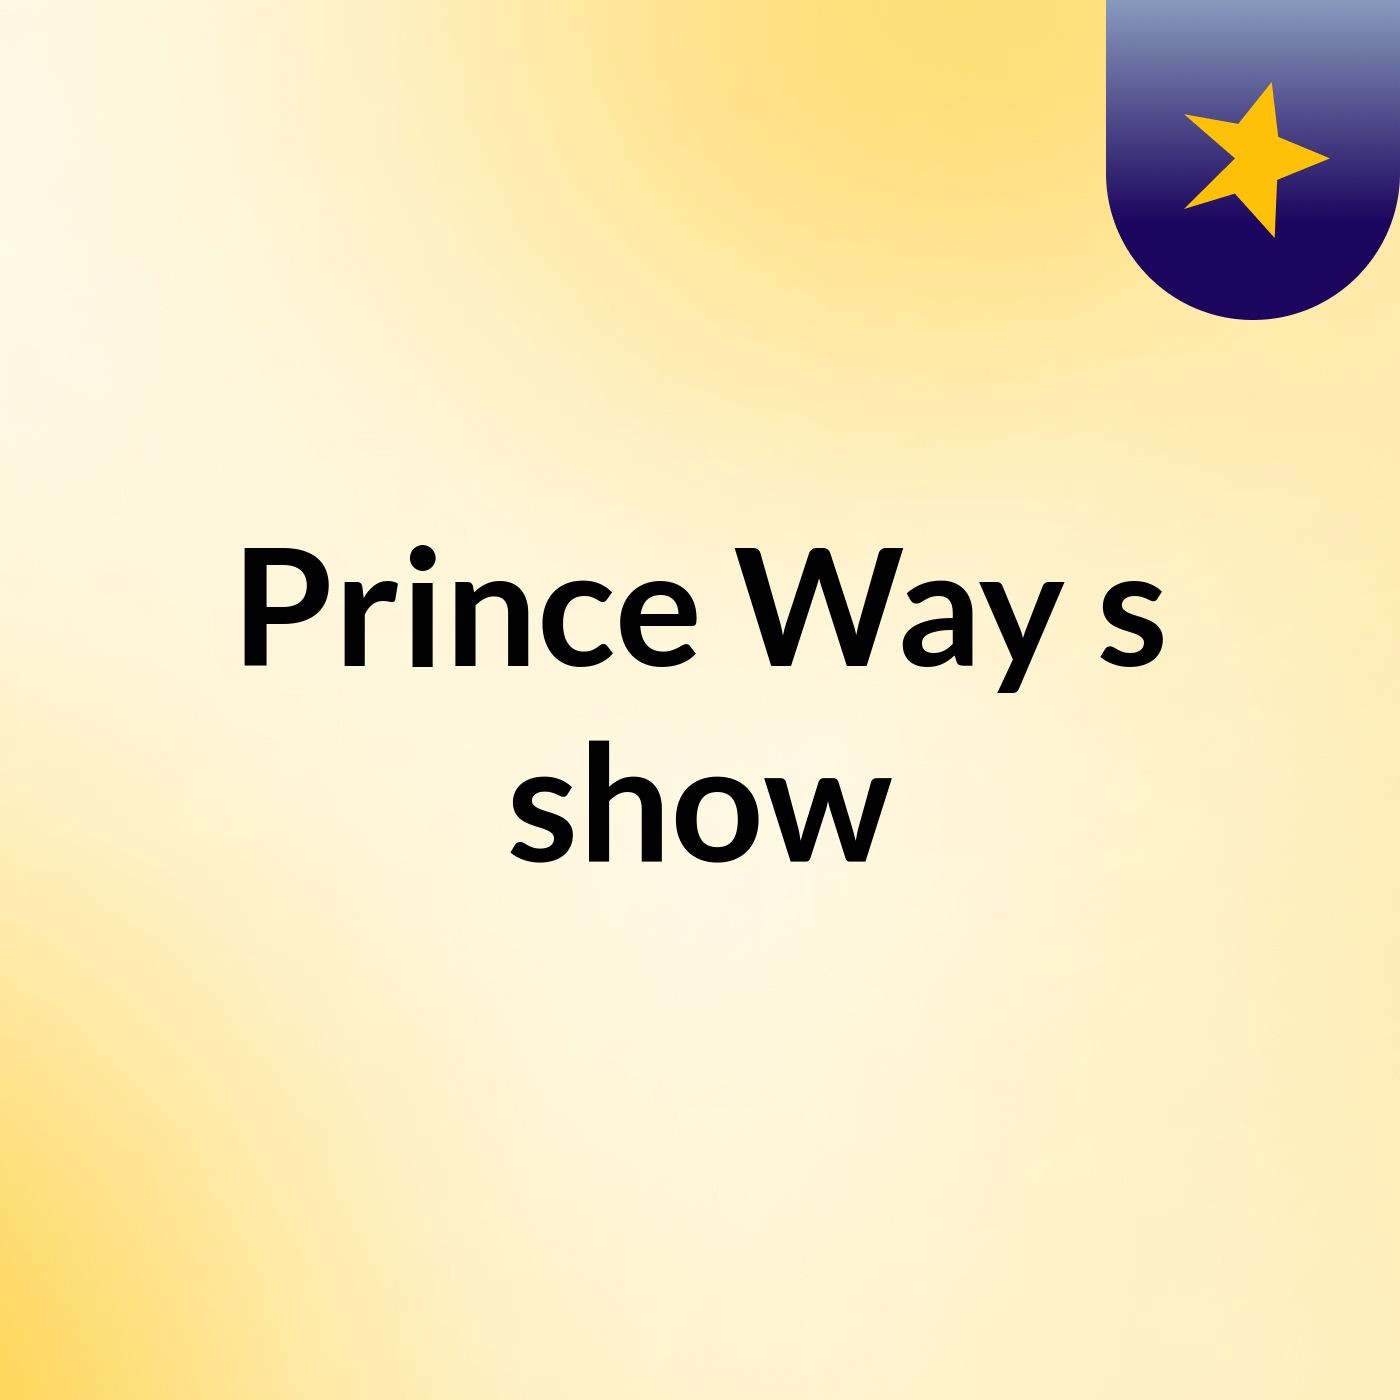 Prince Way's show